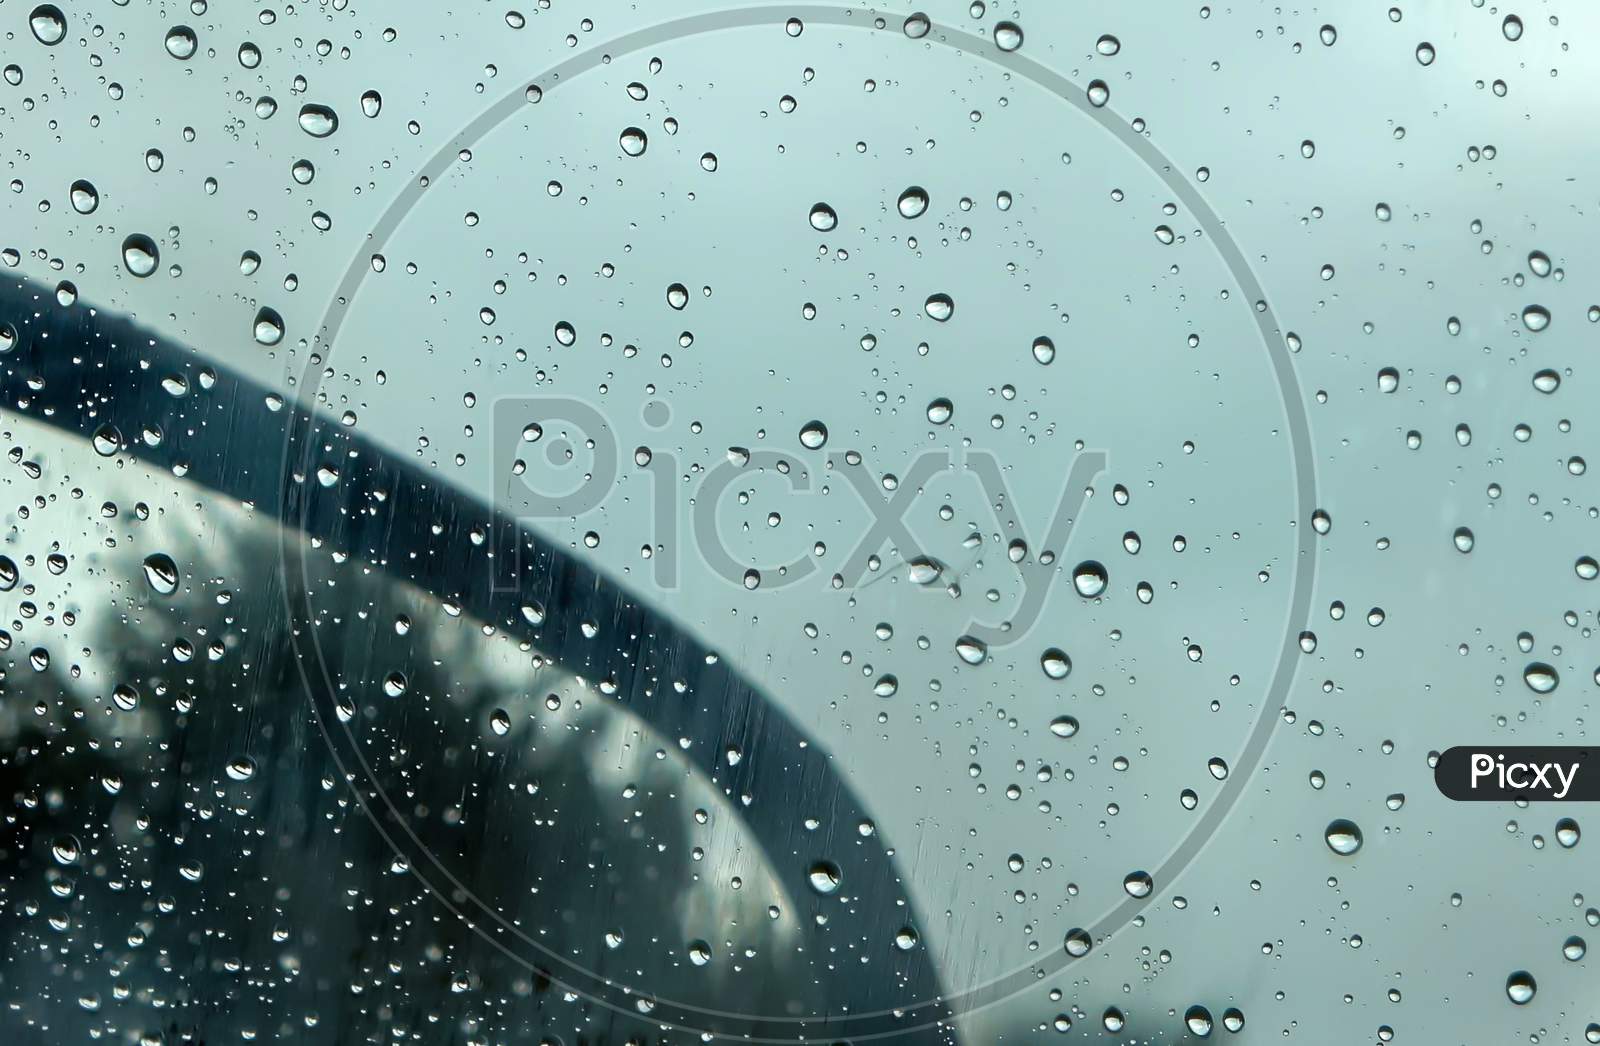 Rain Drops Running Down A Car Window In A Close Up View.